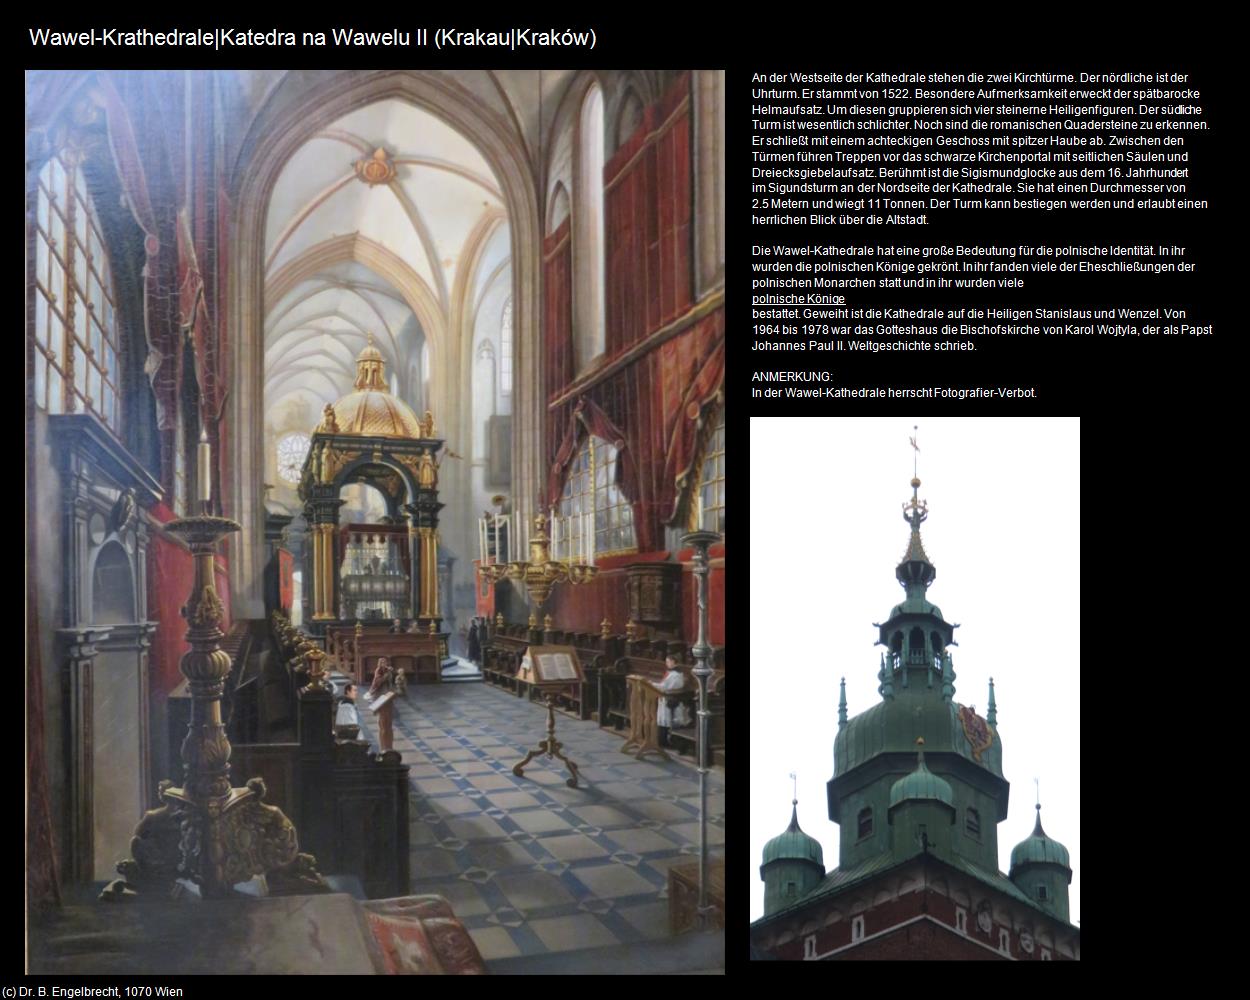 Wawel-Kathedrale II  (Krakau|Krakow) in POLEN-Galizien(c)B.Engelbrecht